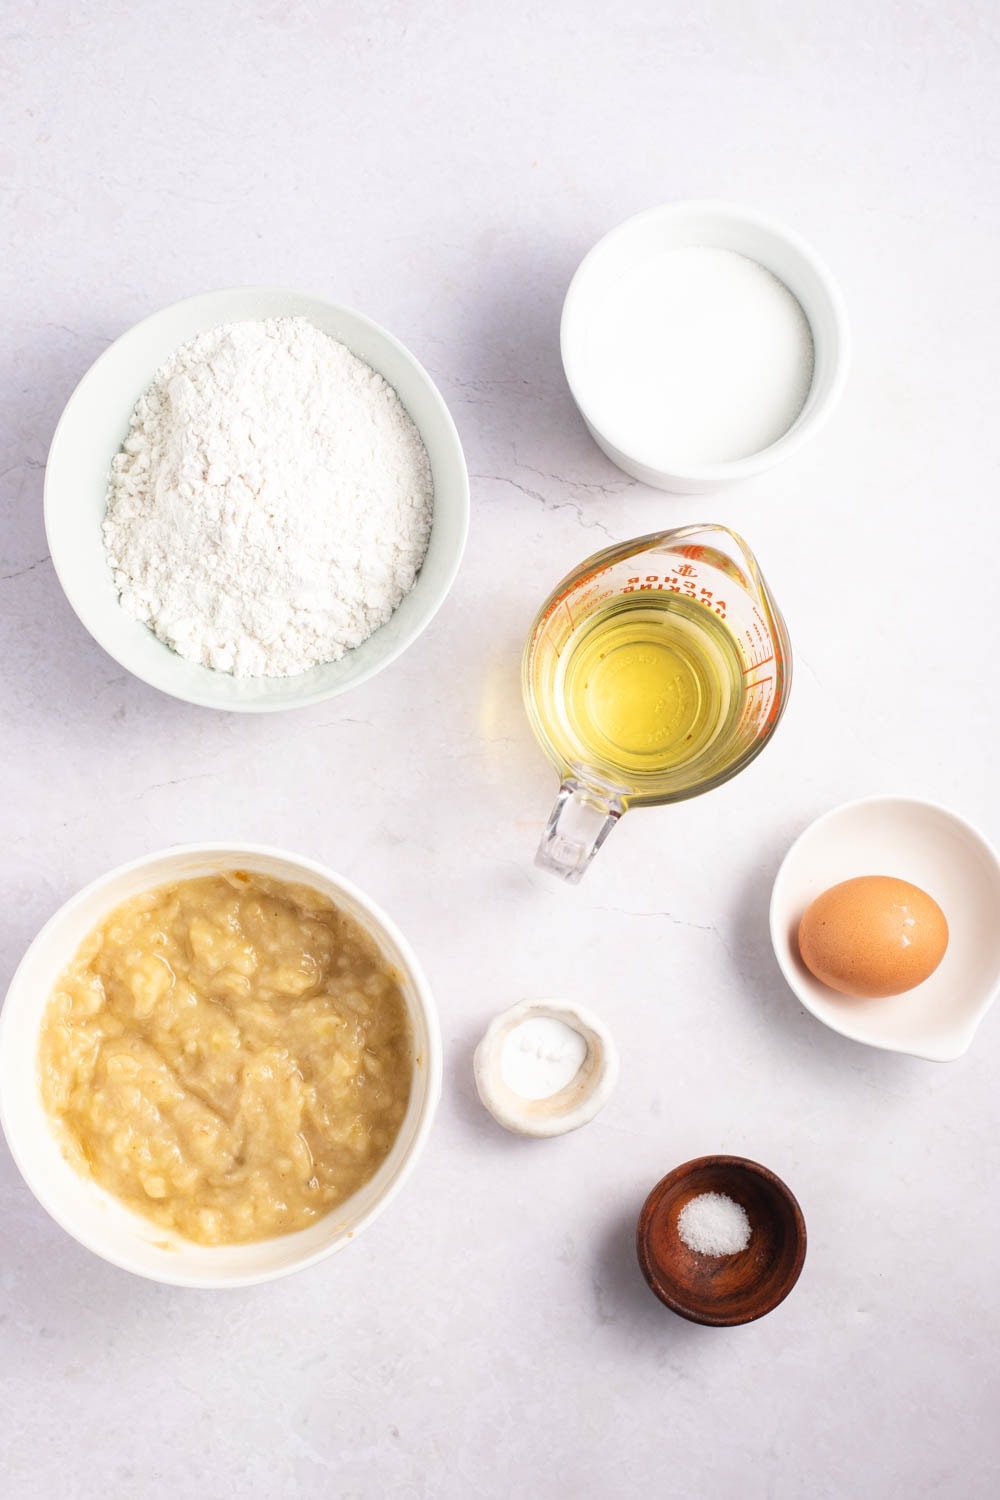 Dairy-Free Banana Bread Ingredients - Oil, Sugar, Egg, Flour, Baking Soda, Salt and Bananas